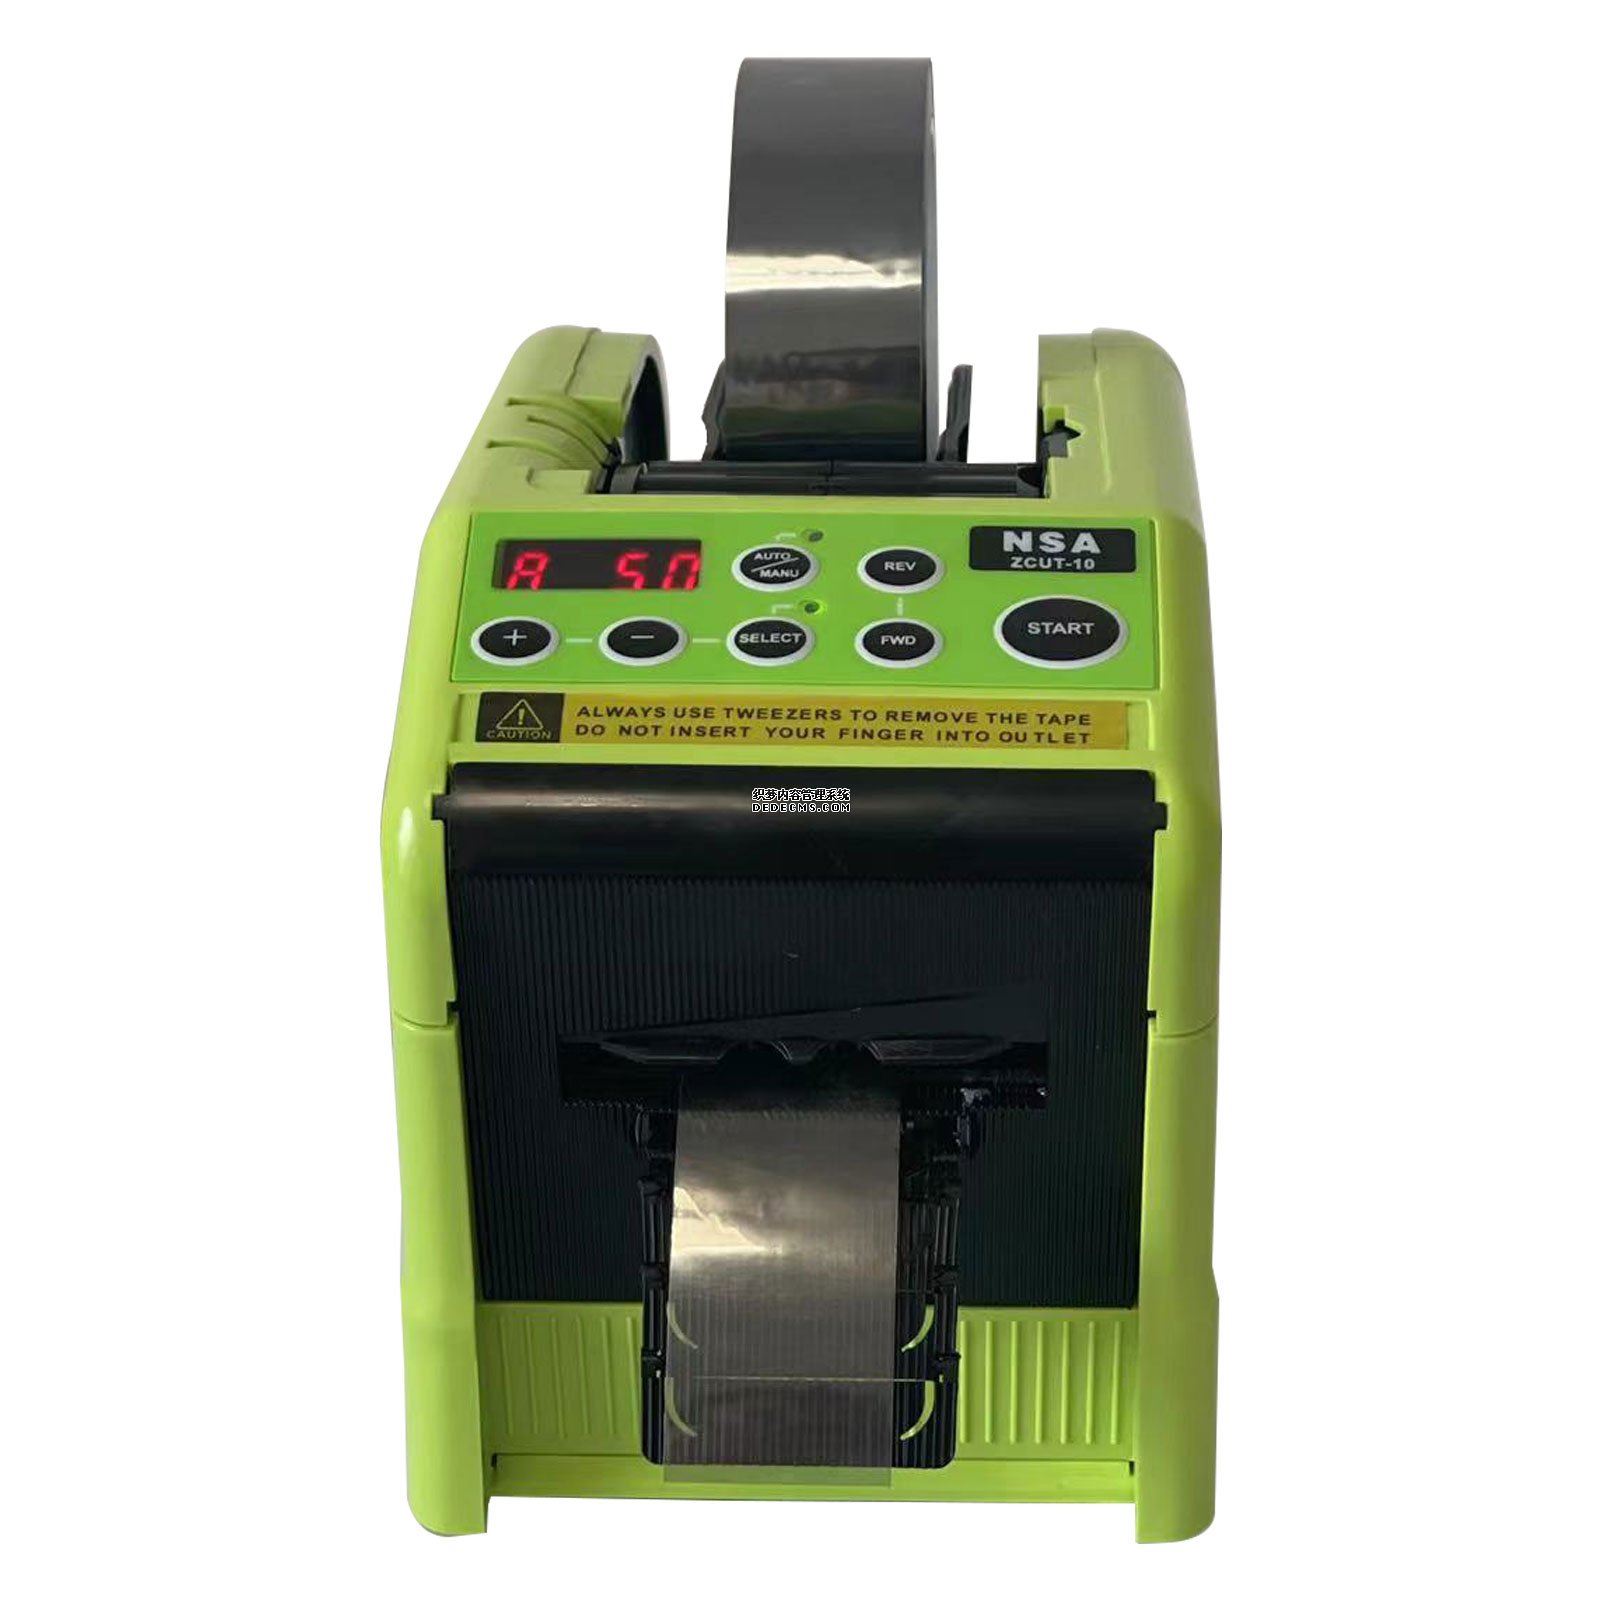 ZCUT-10 Automatic Infrarotsensor Tape Cutter Machine Bandspender Dispenser Set 